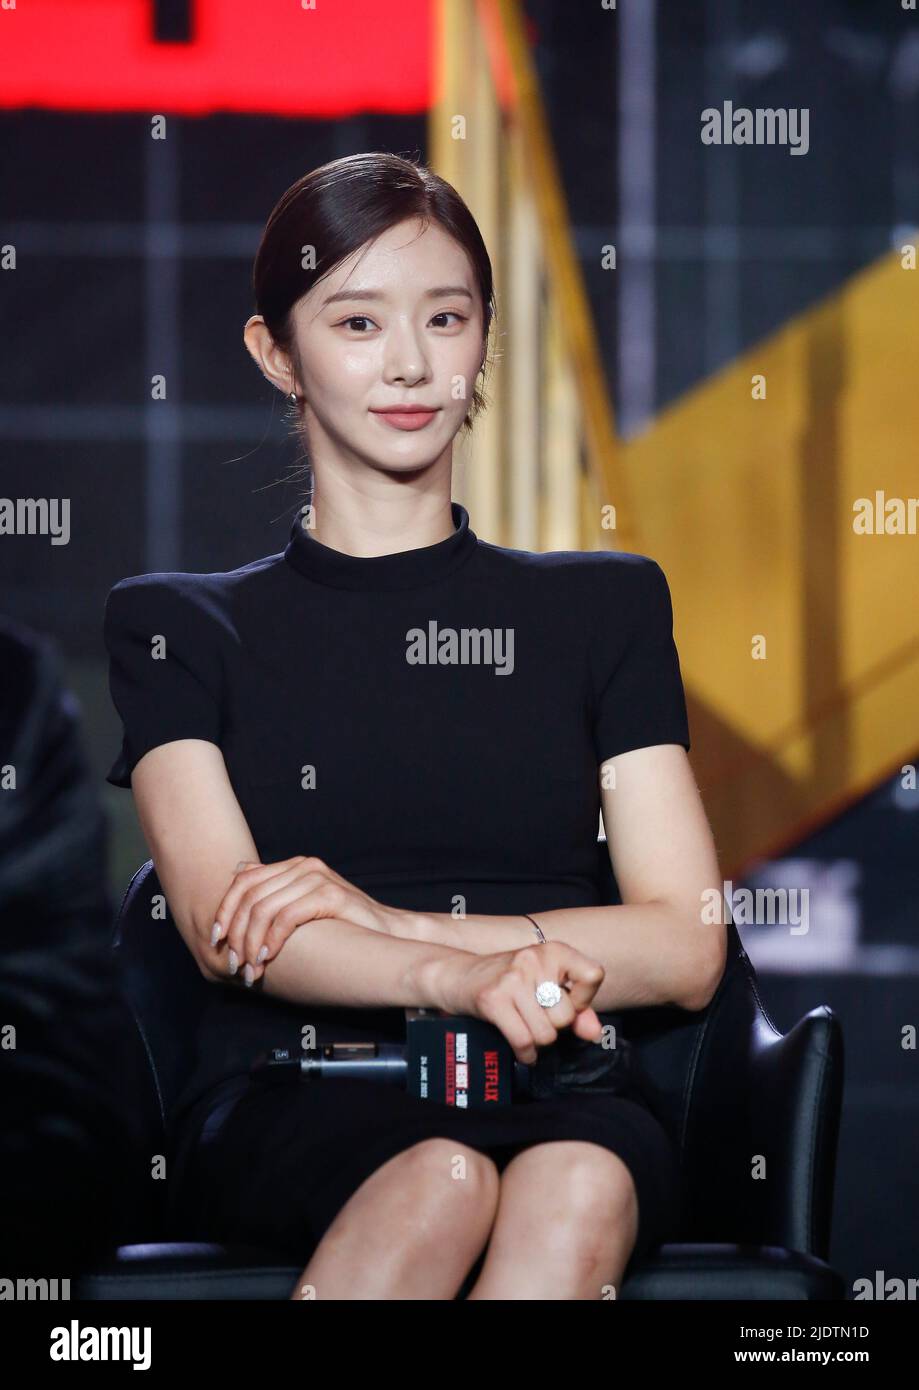 Lee Joo-Bin, June 22, 2022 : Lee Joo-Bin attends a production press  conference for the Netflix series "Money Heist: Korea - Joint Economic  Area" in Seoul, South Korea. The Netflix series is